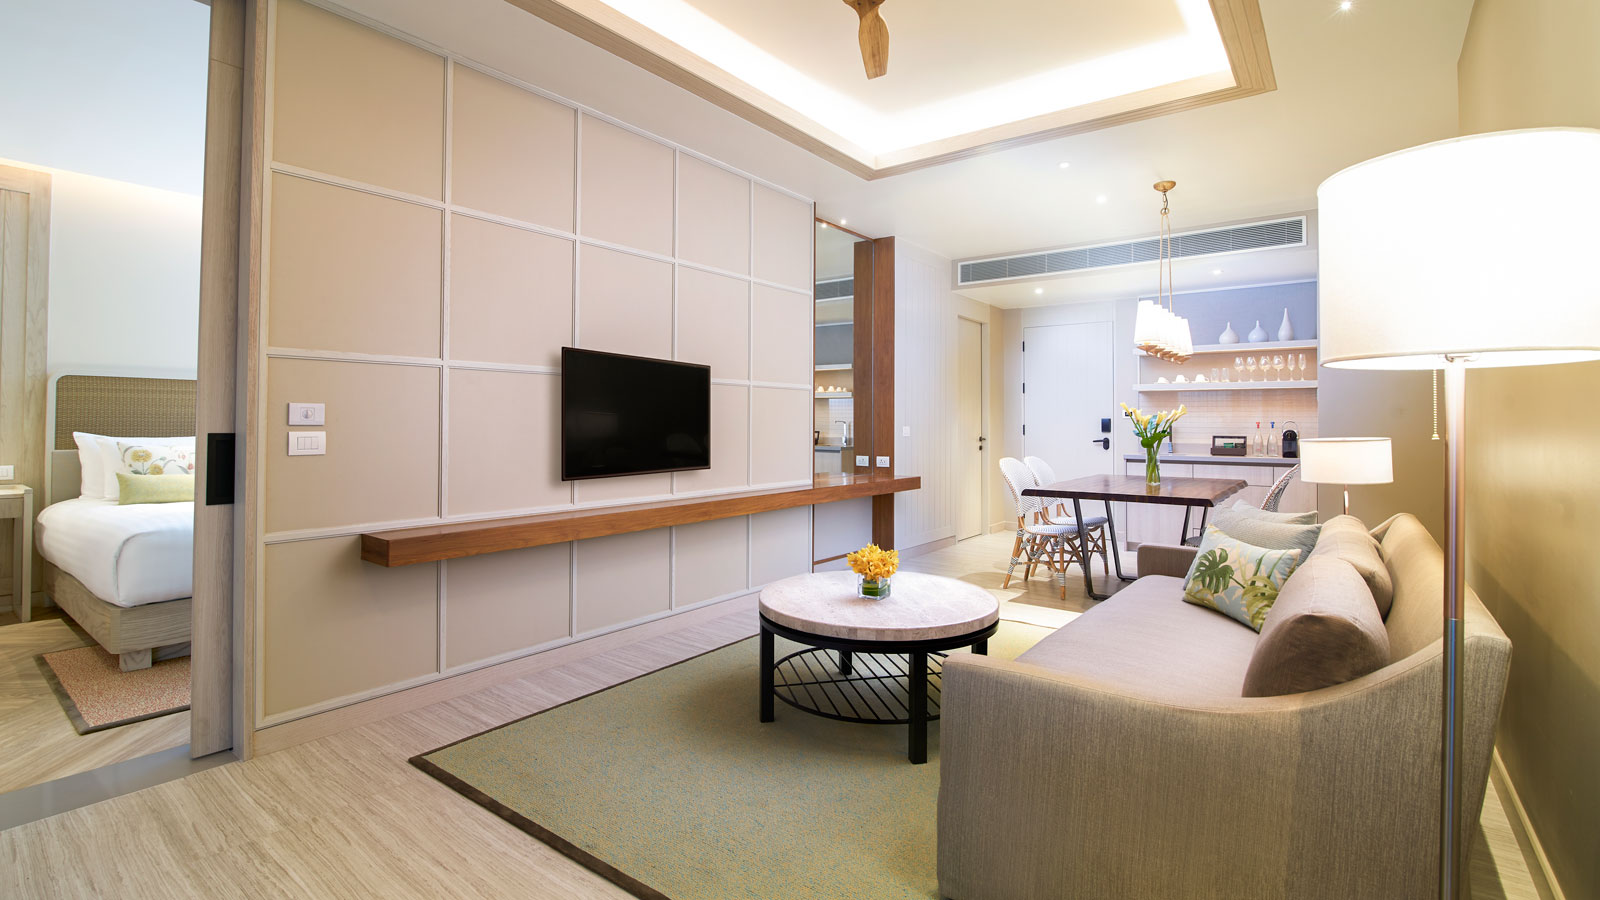 Flat-screen TV in living room in Amari Suite - أماري المحيط باتايا